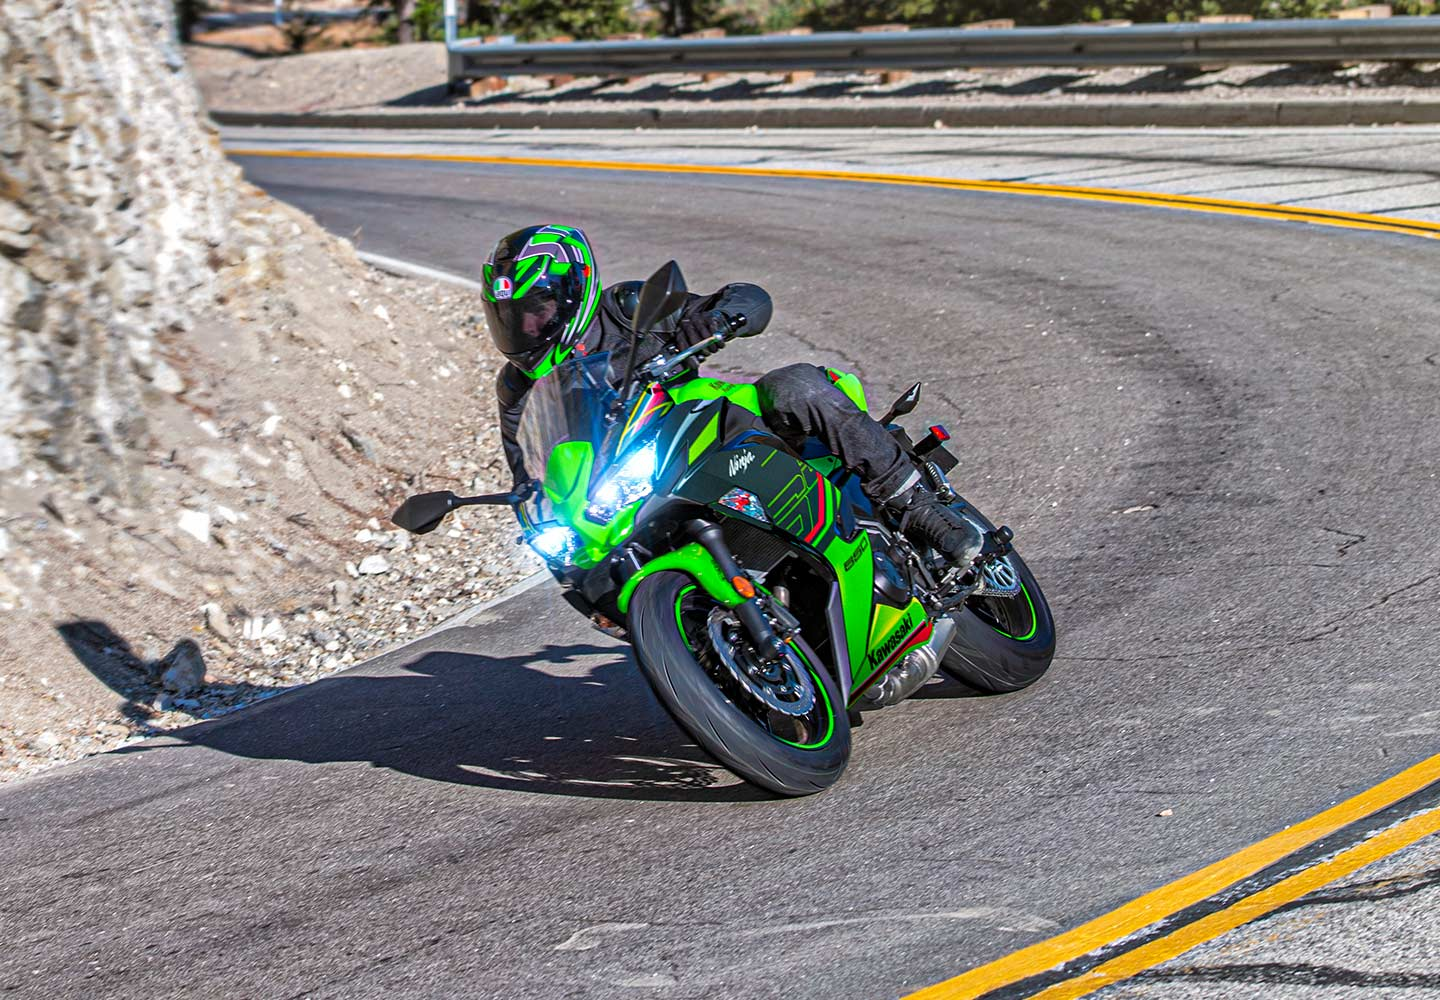 Kawasaki Ninja® 650 | Motorcycle | Sporty & Nimble